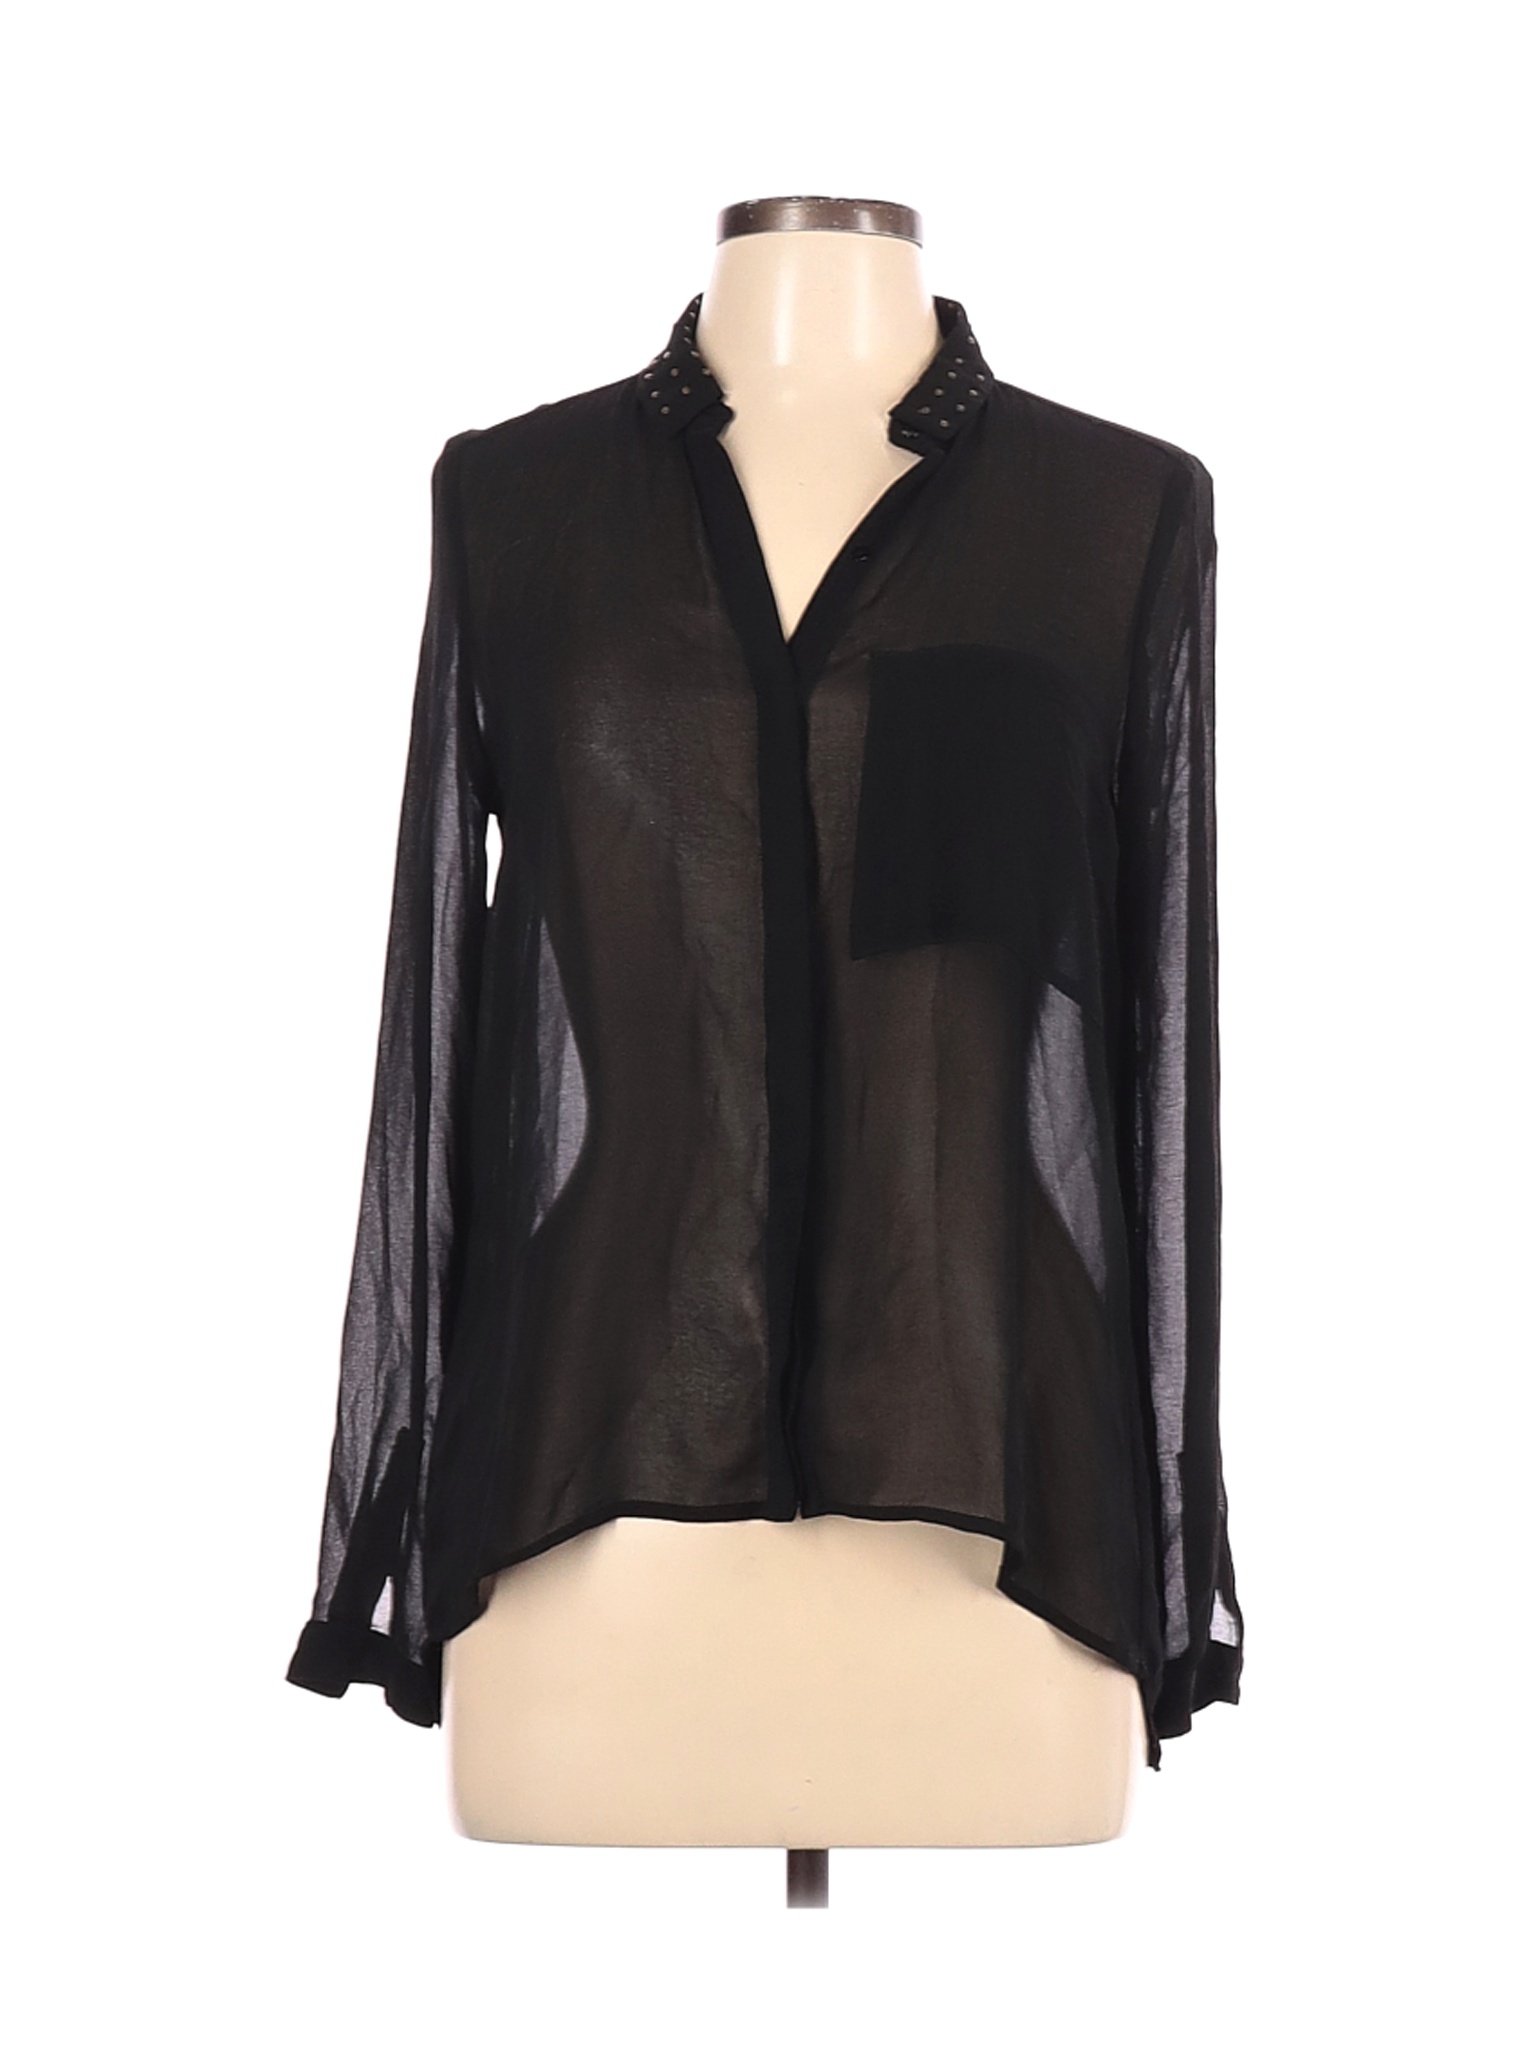 Zara Women Black Long Sleeve Blouse L | eBay